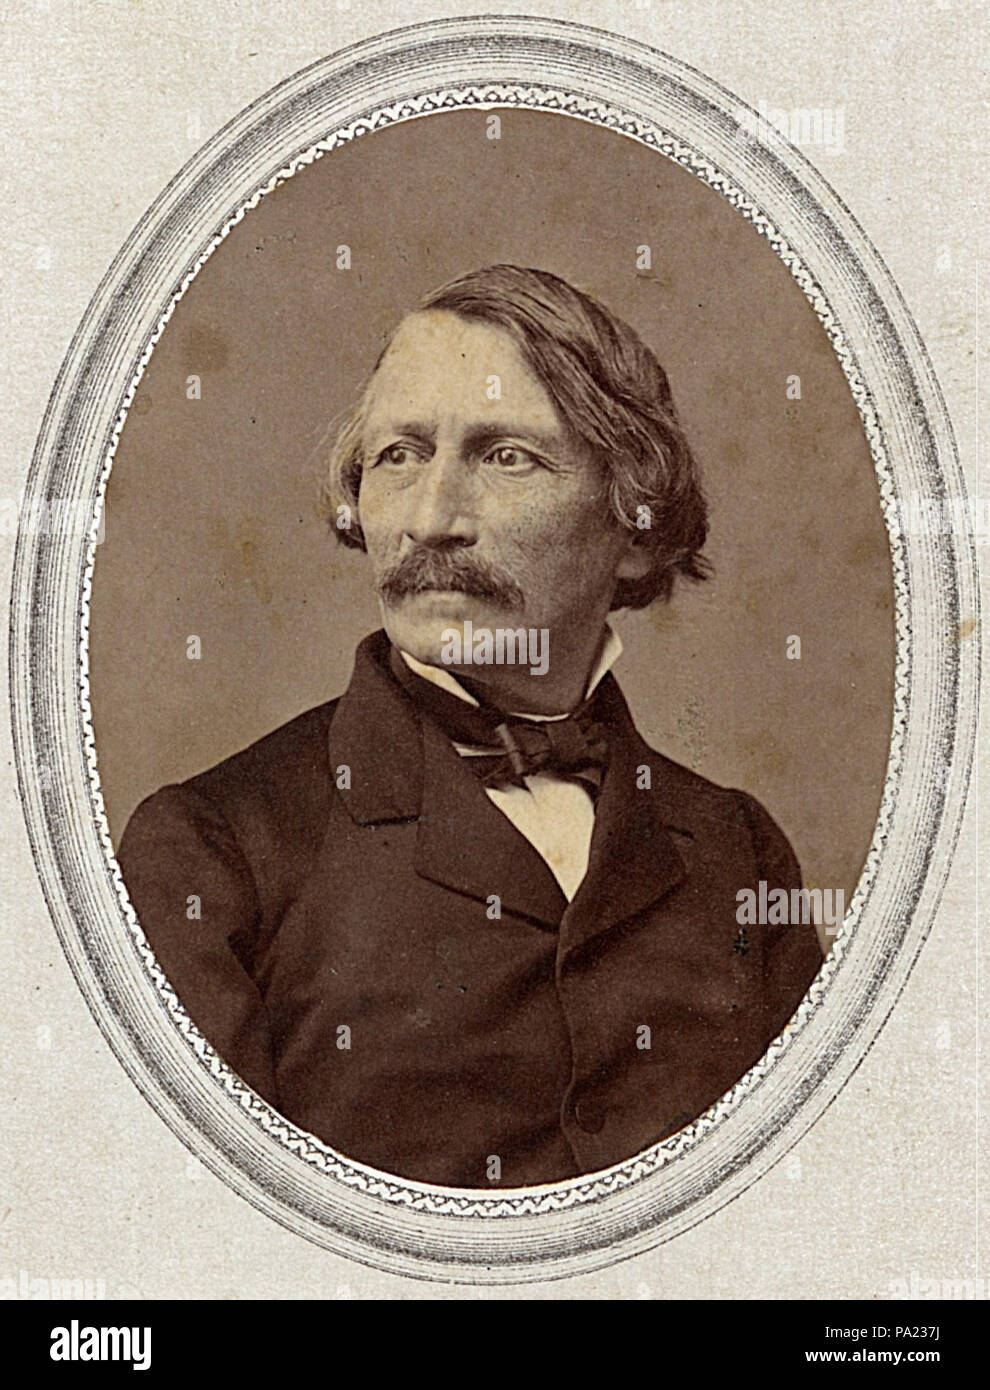 628 ETH-BIB-Semper, Gottfried (1803-1879)-Portrait-Portr 10869.tif (cropped) Stock Photo